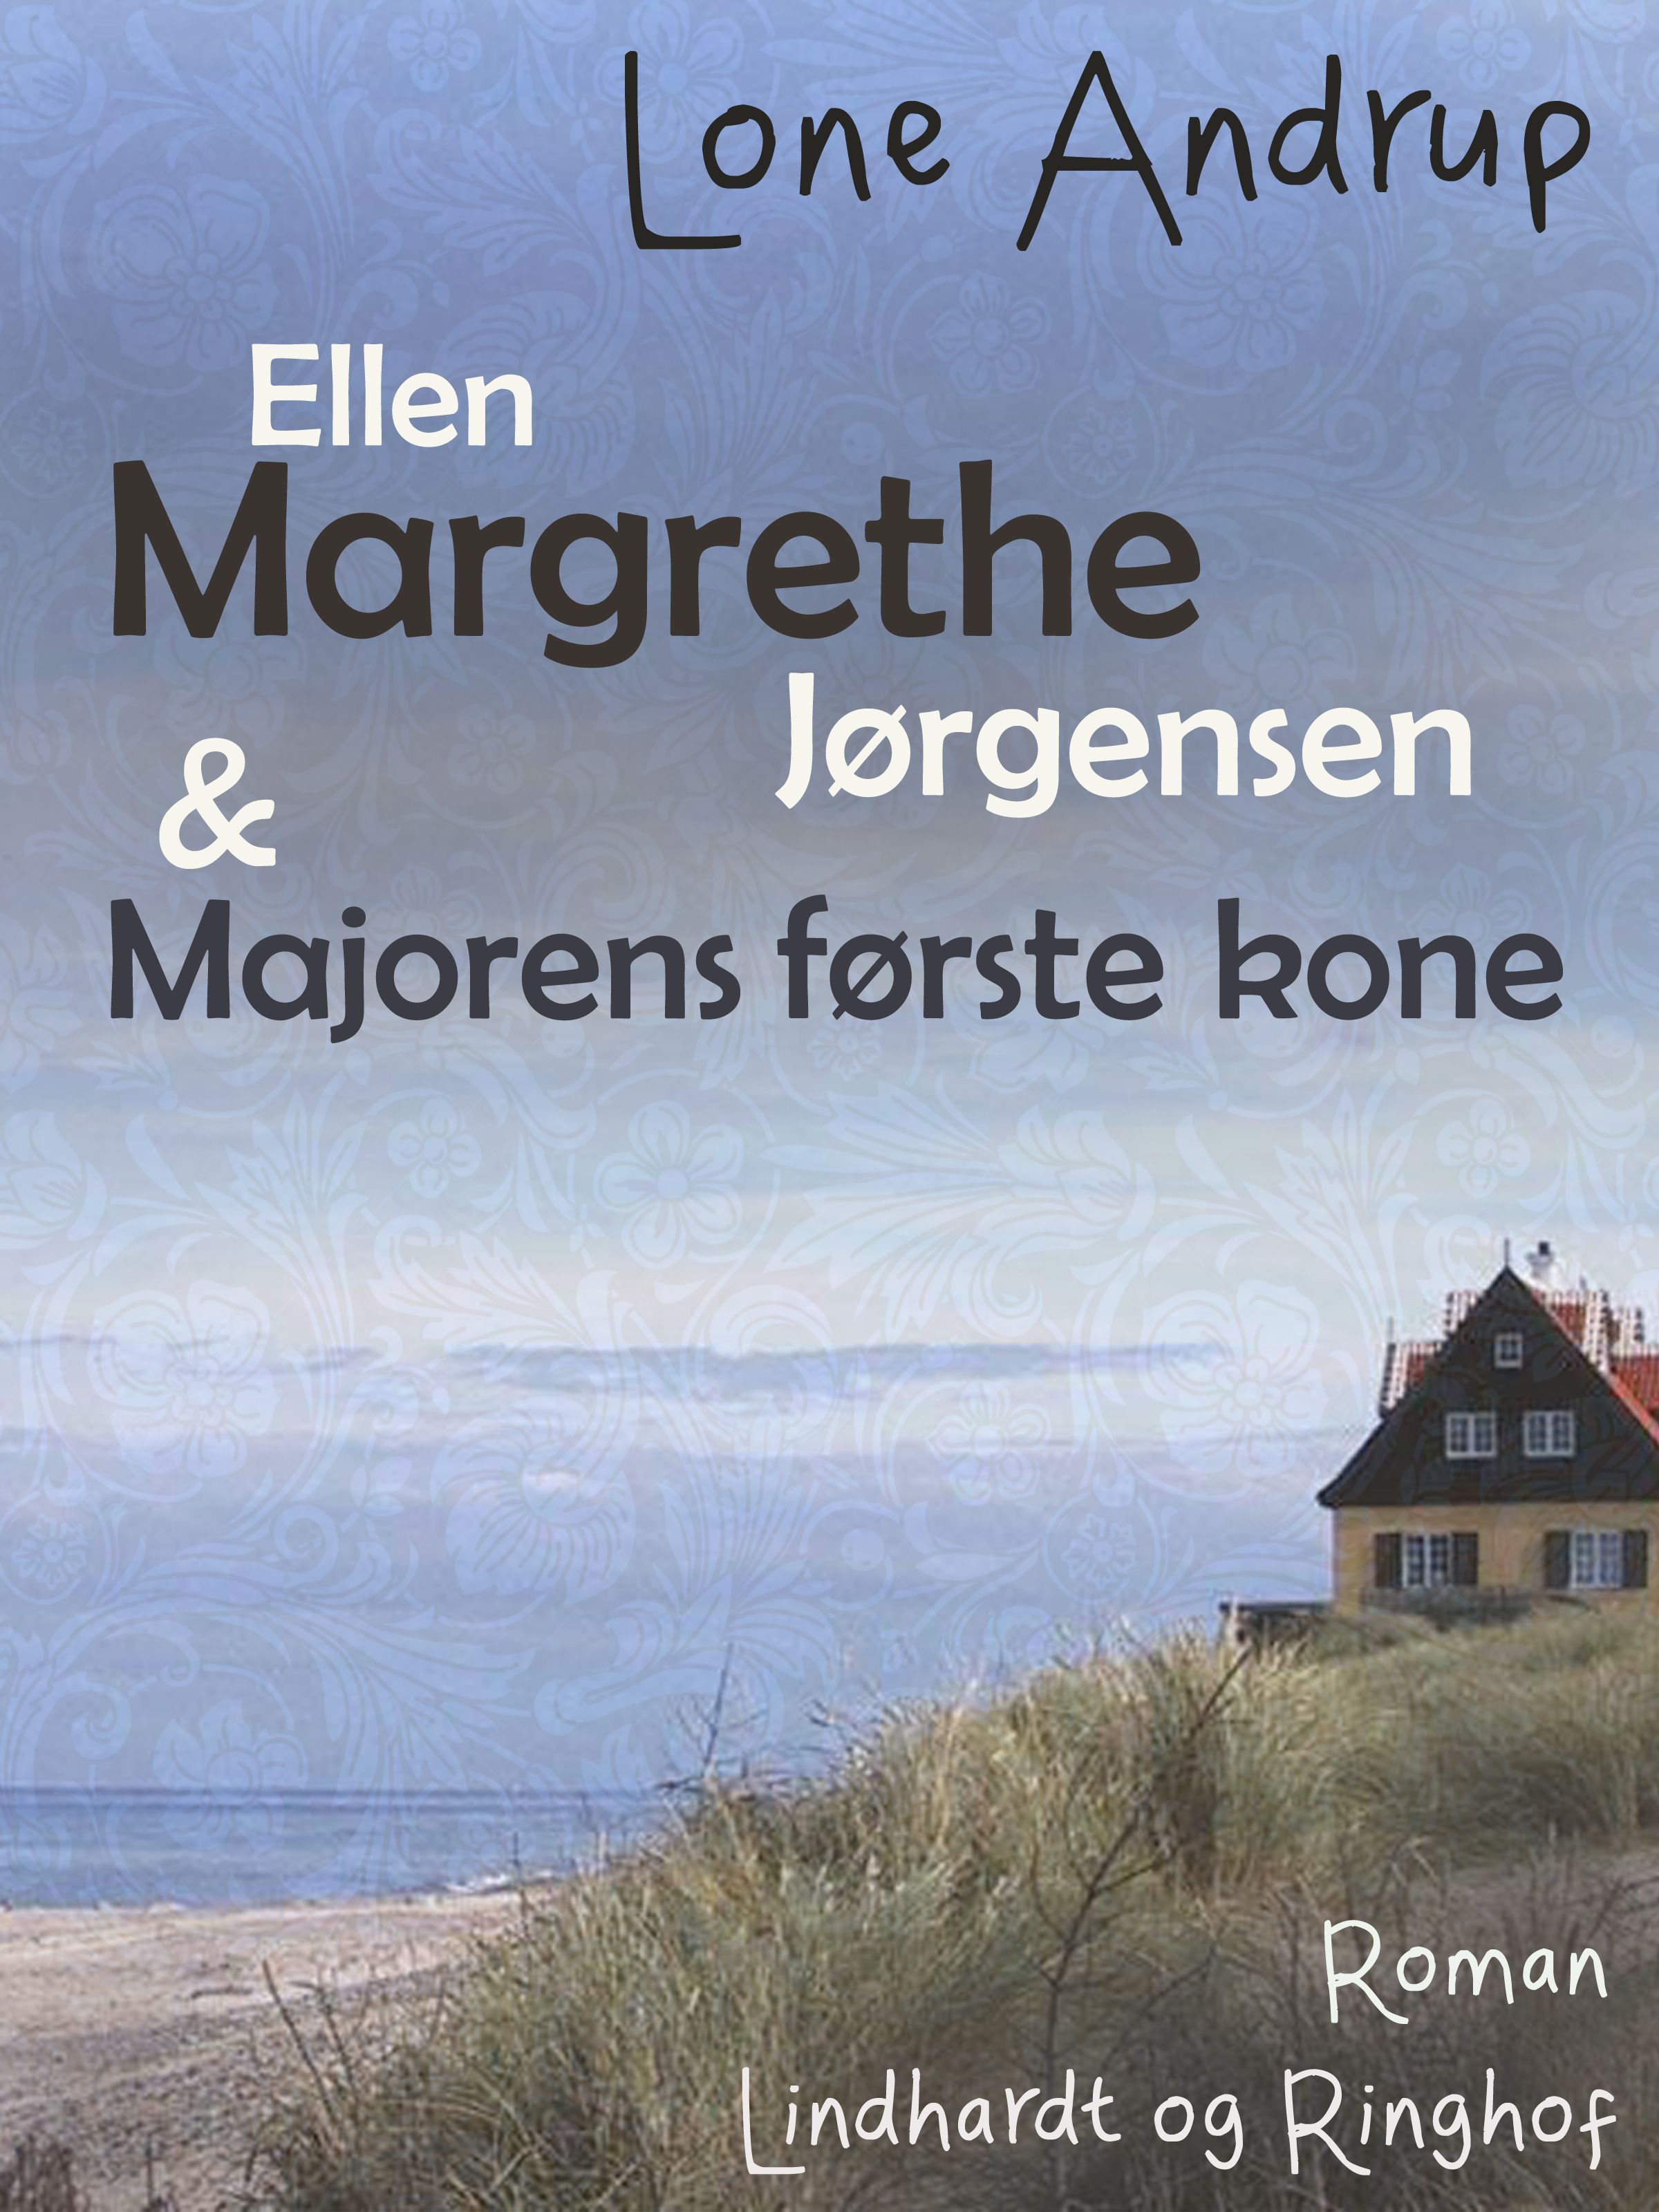 Ellen Margrethe Jørgensen & Majorens første kone, audiobook by Lone Andrup